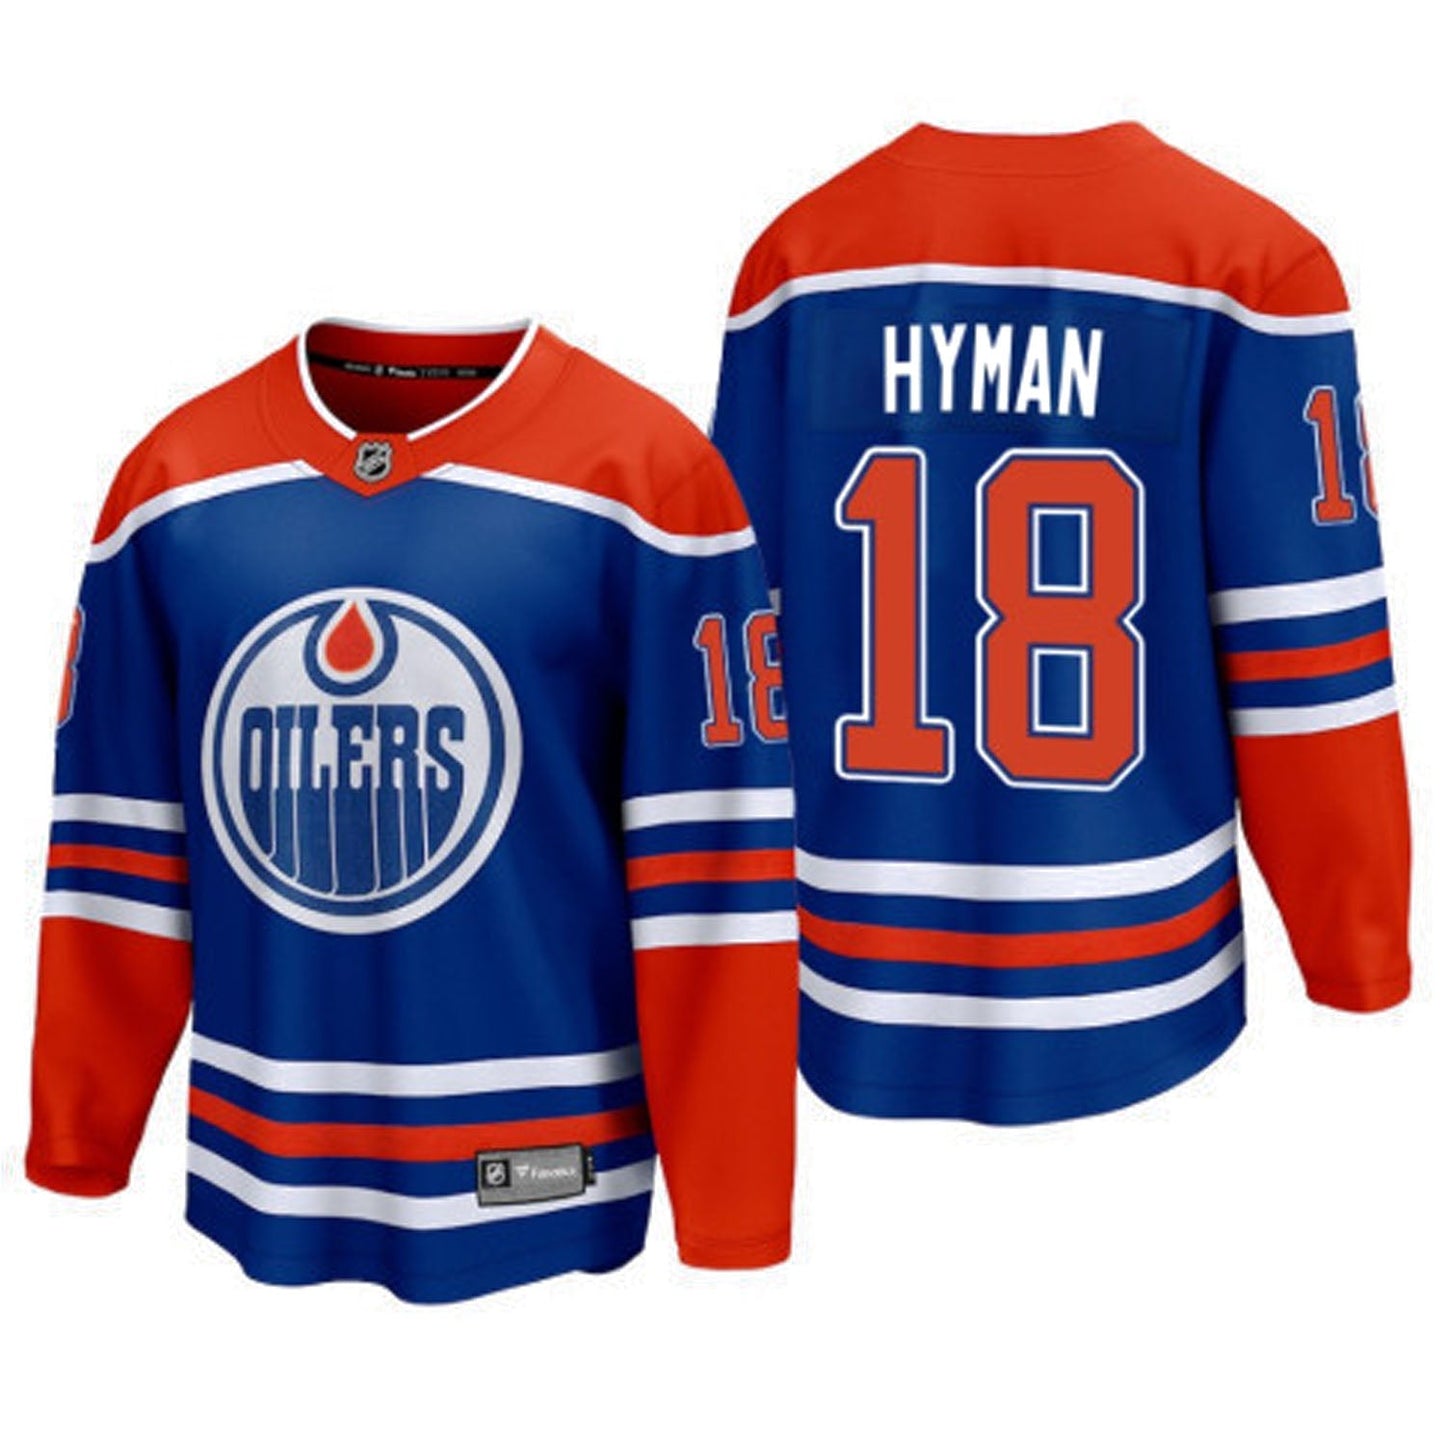 NHL Zach Hyman Edmonton Oilers 18 Jersey